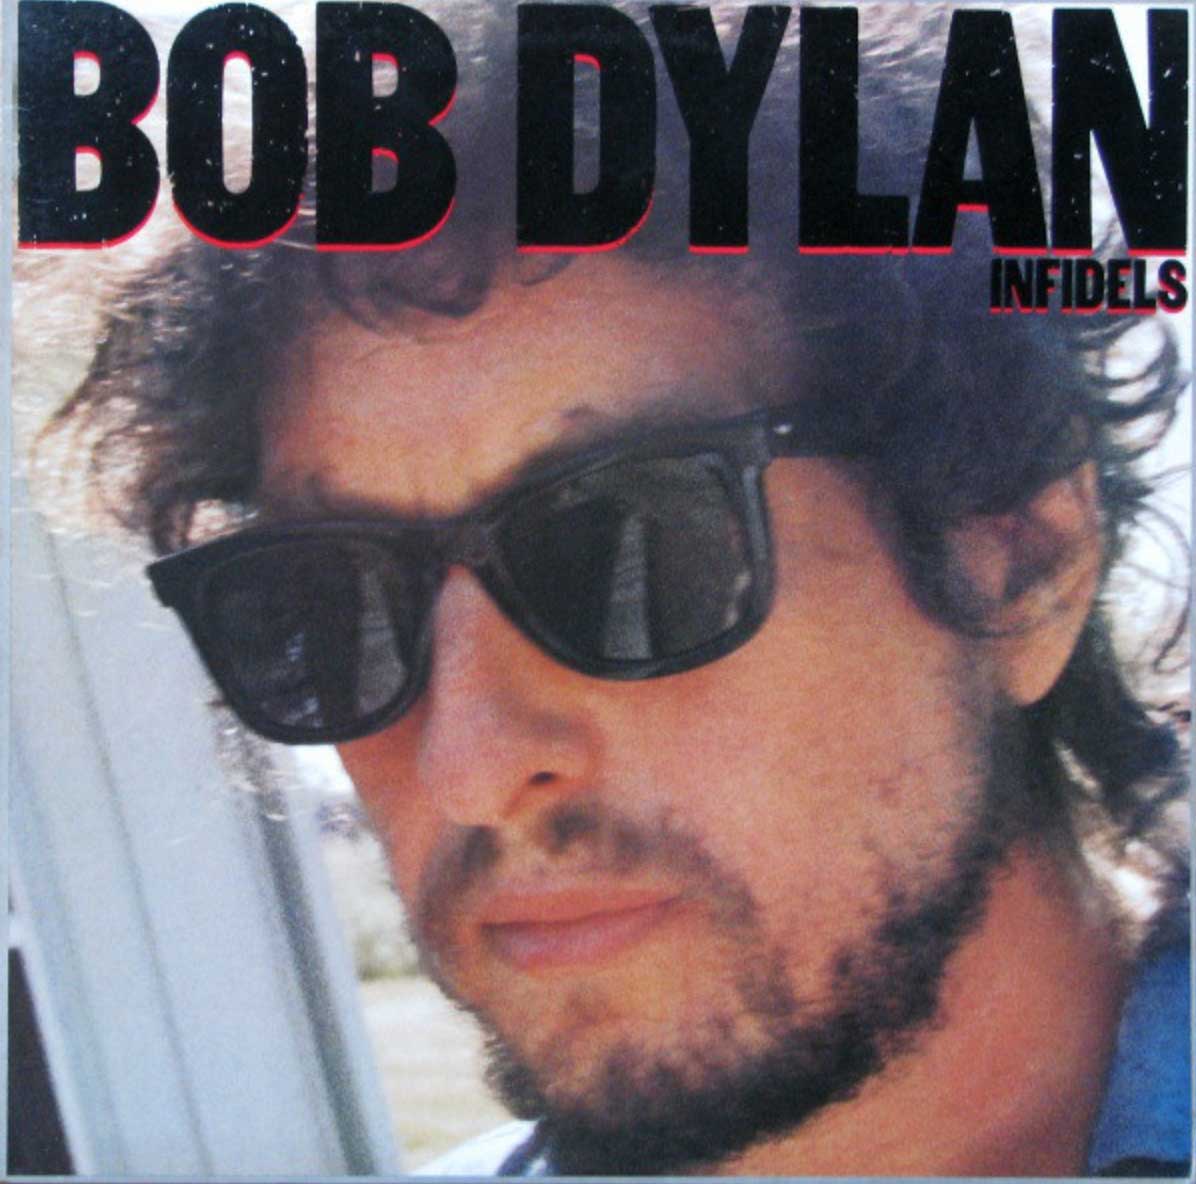 Bob Dylan - Infidels - 1983